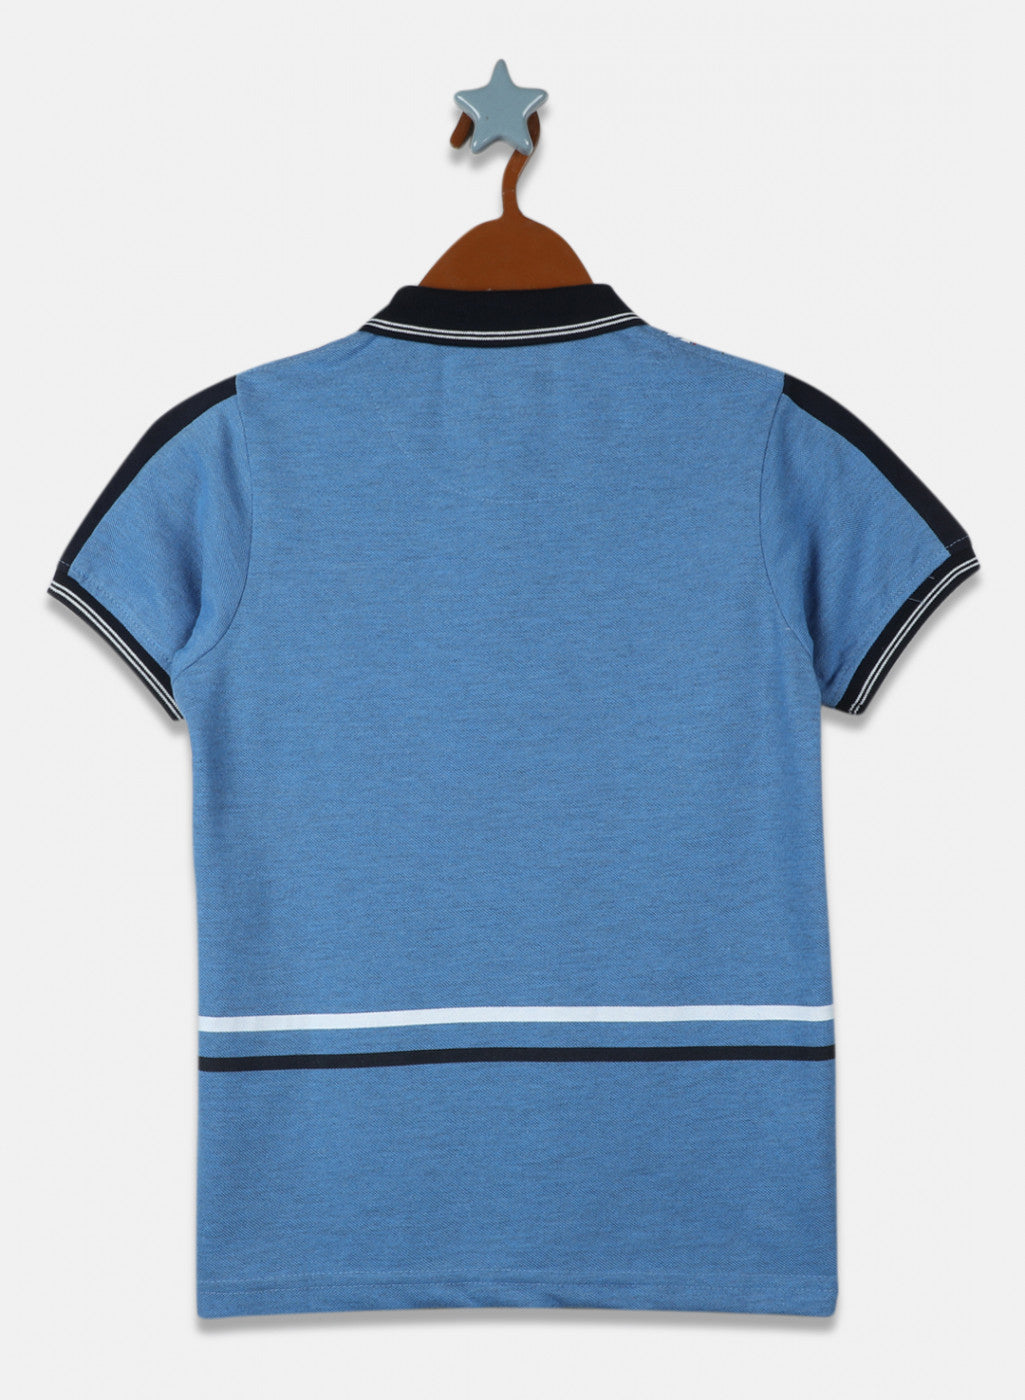 Boys Blue Printed T-Shirt